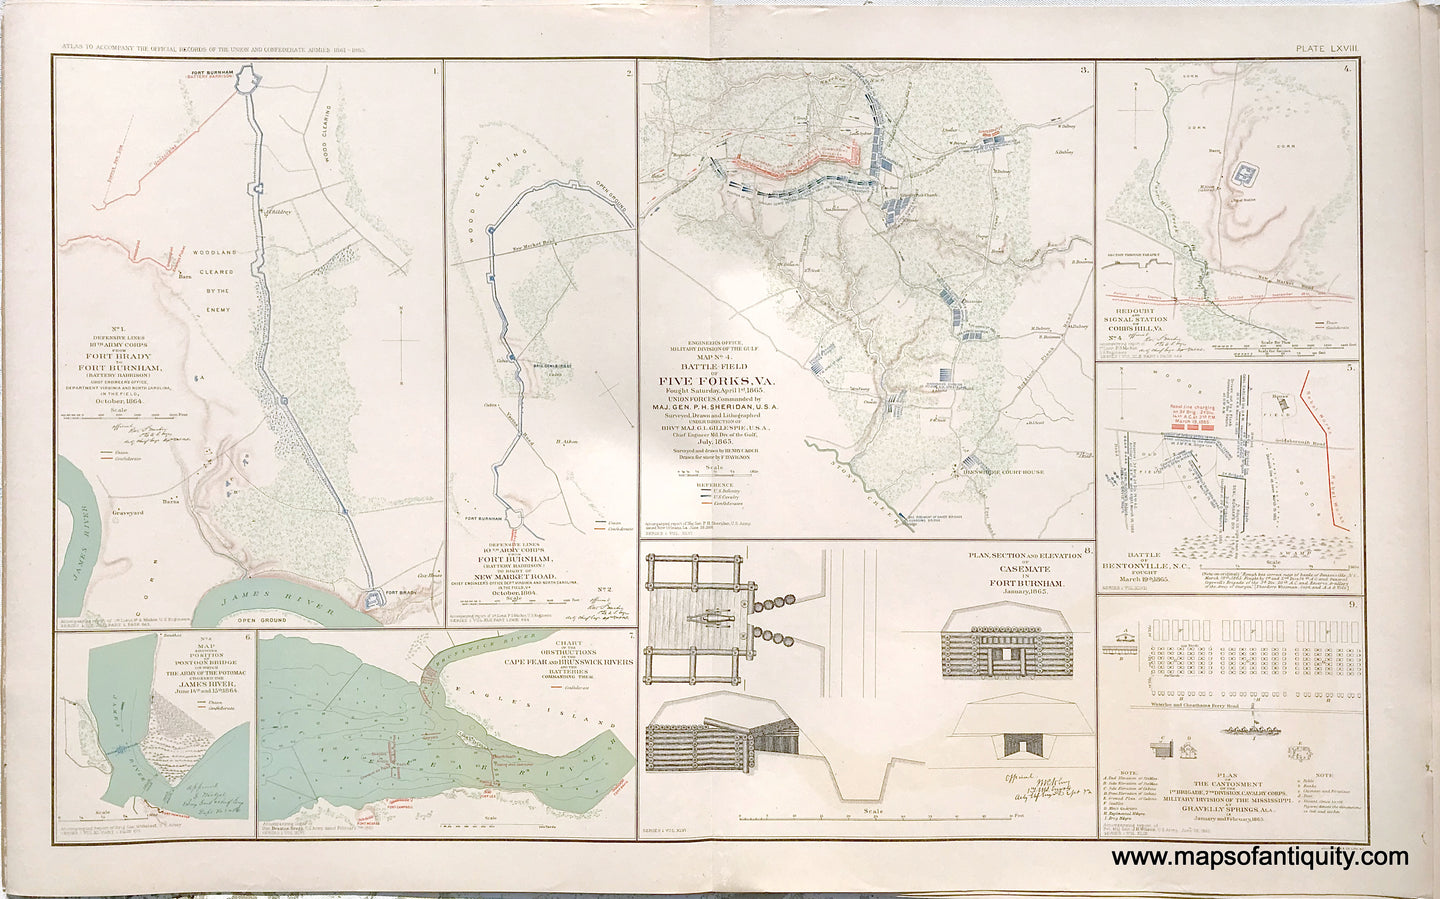 Antique-Lithograph-Print-Plate-68.-Battle-plans-defensive-lines-and-general-plans-of-Fort-Burnham-VA-Five-Forks-VA-Cobb's-Hill-VA-Bentonville-NC-and-Gravelly-Springs-AL.-1893-US-War-Dept.-Civil-War-Civil-War-1800s-19th-century-Maps-of-Antiquity